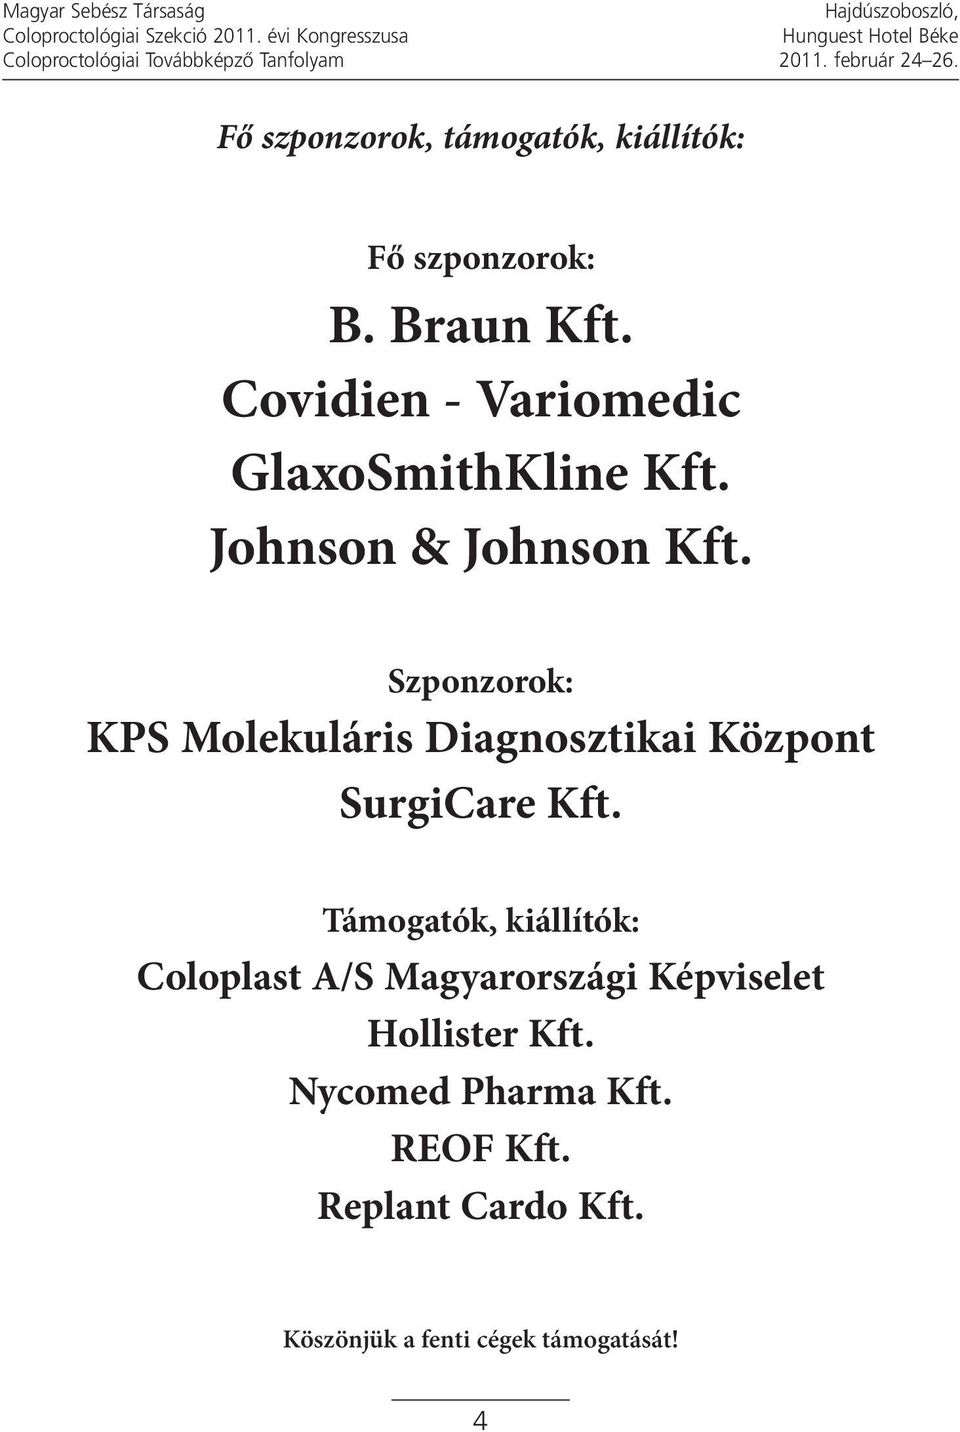 Johnson & Johnson kft. szponzorok: kps molekuláris Diagnosztikai központ surgicare kft.